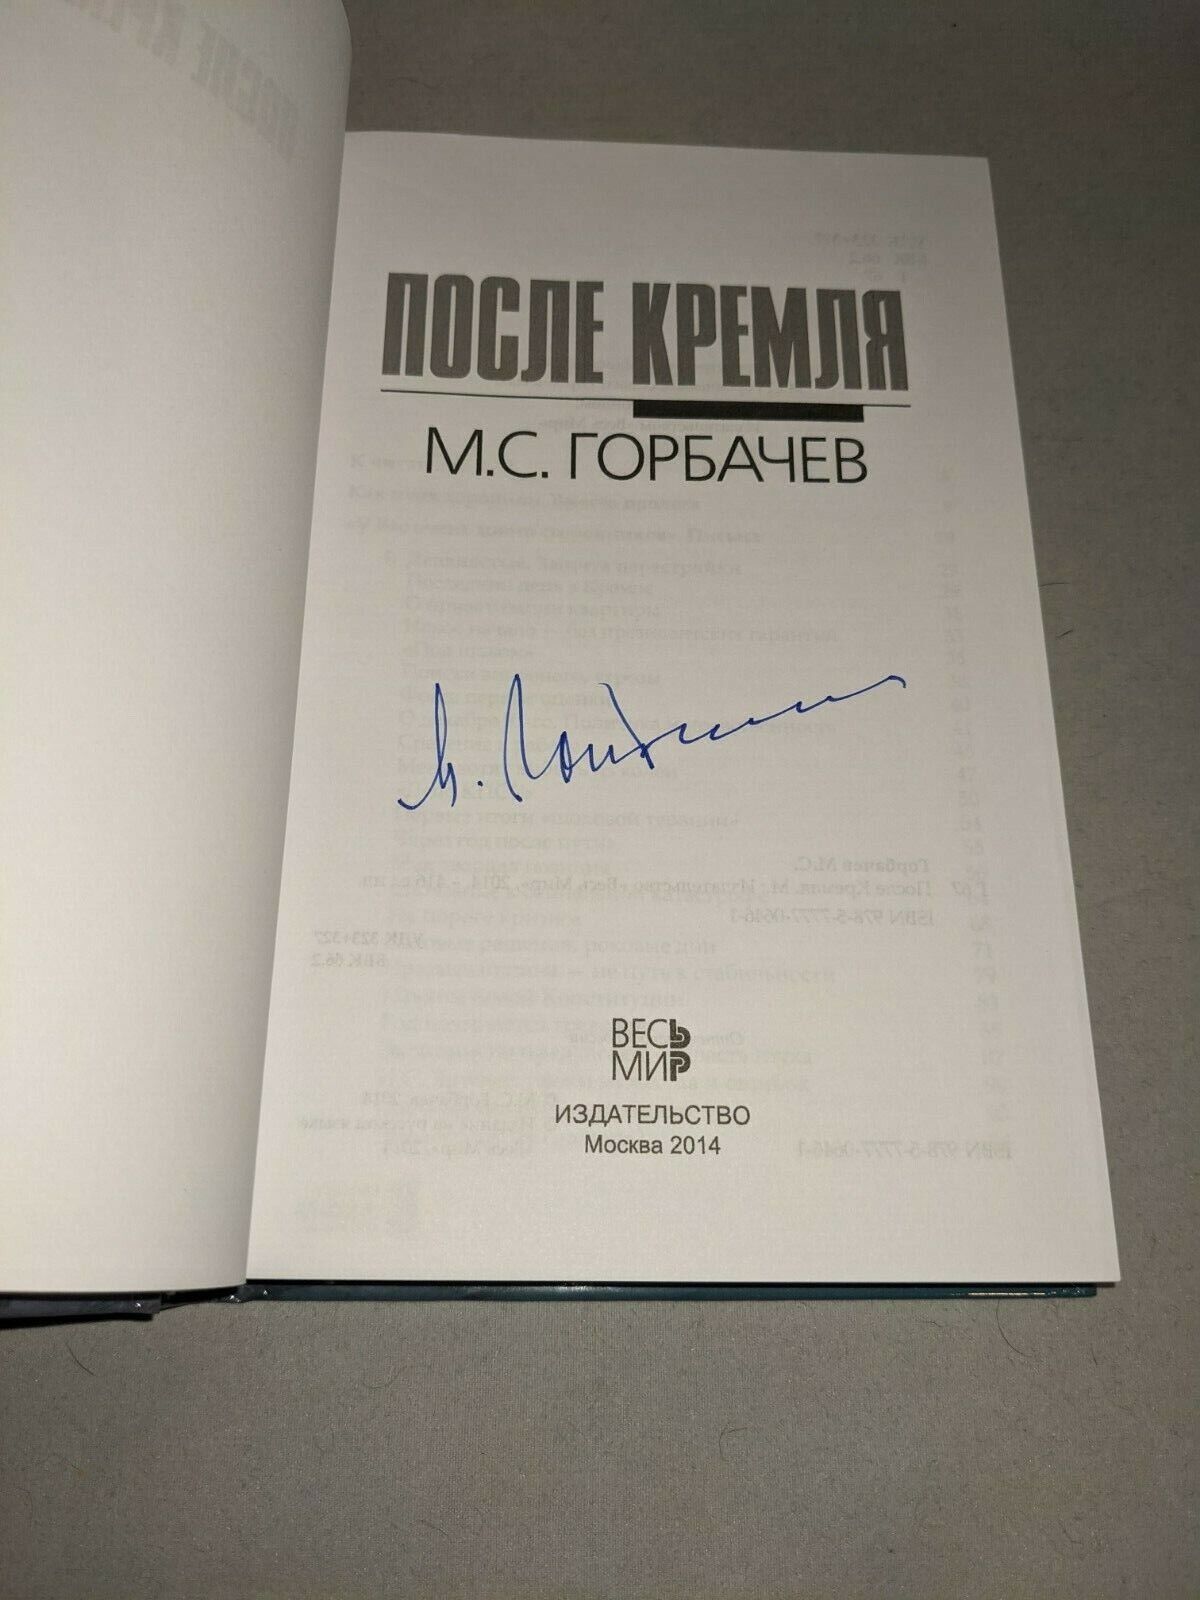 SOVIET UNION PRESIDENT MIKHAIL GORBACHEV signed autographed BOOK BECKETT LOA #2